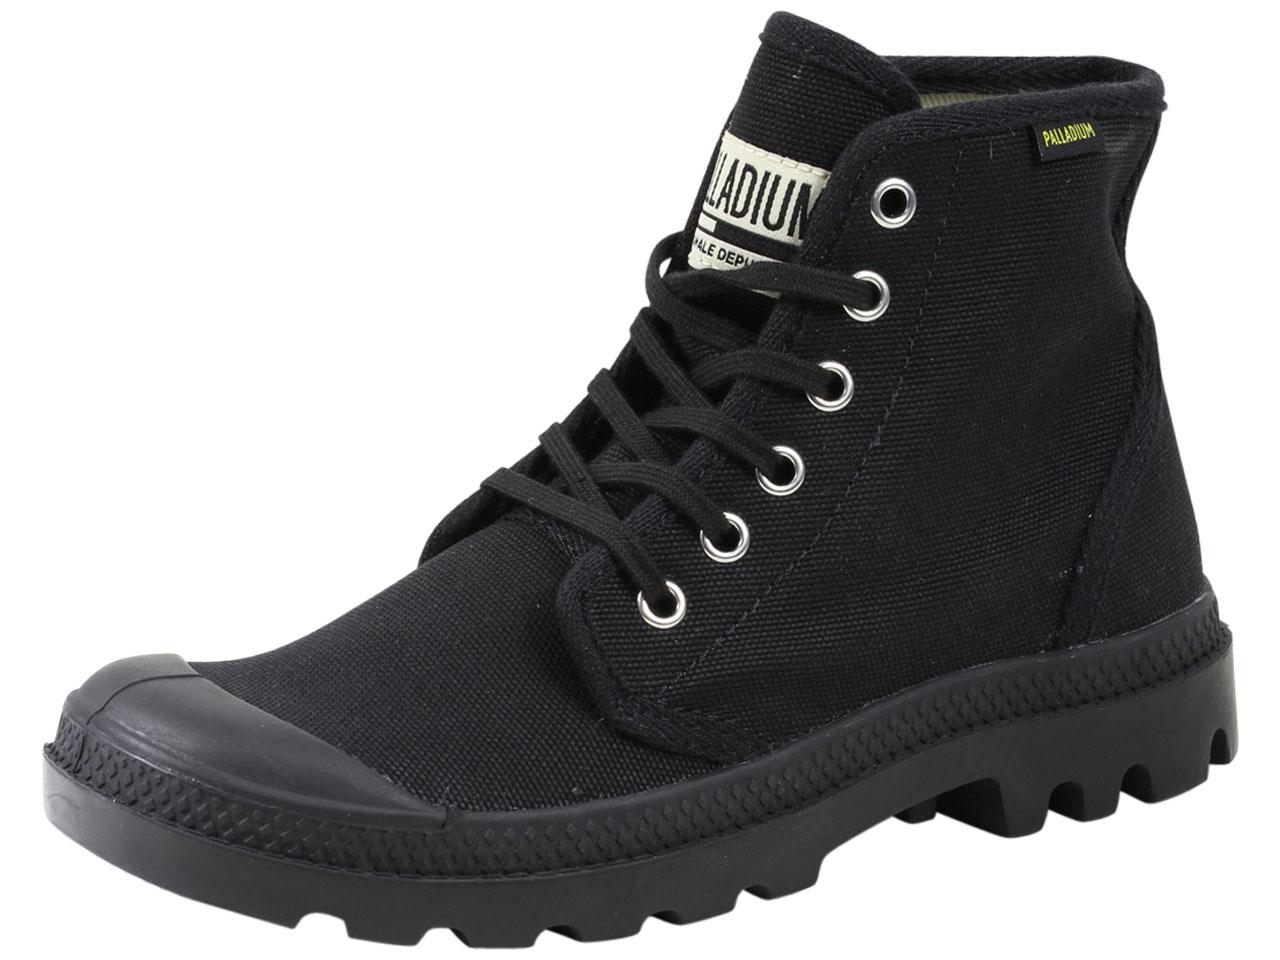 Palladium Men's Pampa Hi Originale Chukka Boots Shoes - Black - 5 D(M) US/6.5 B(M) US